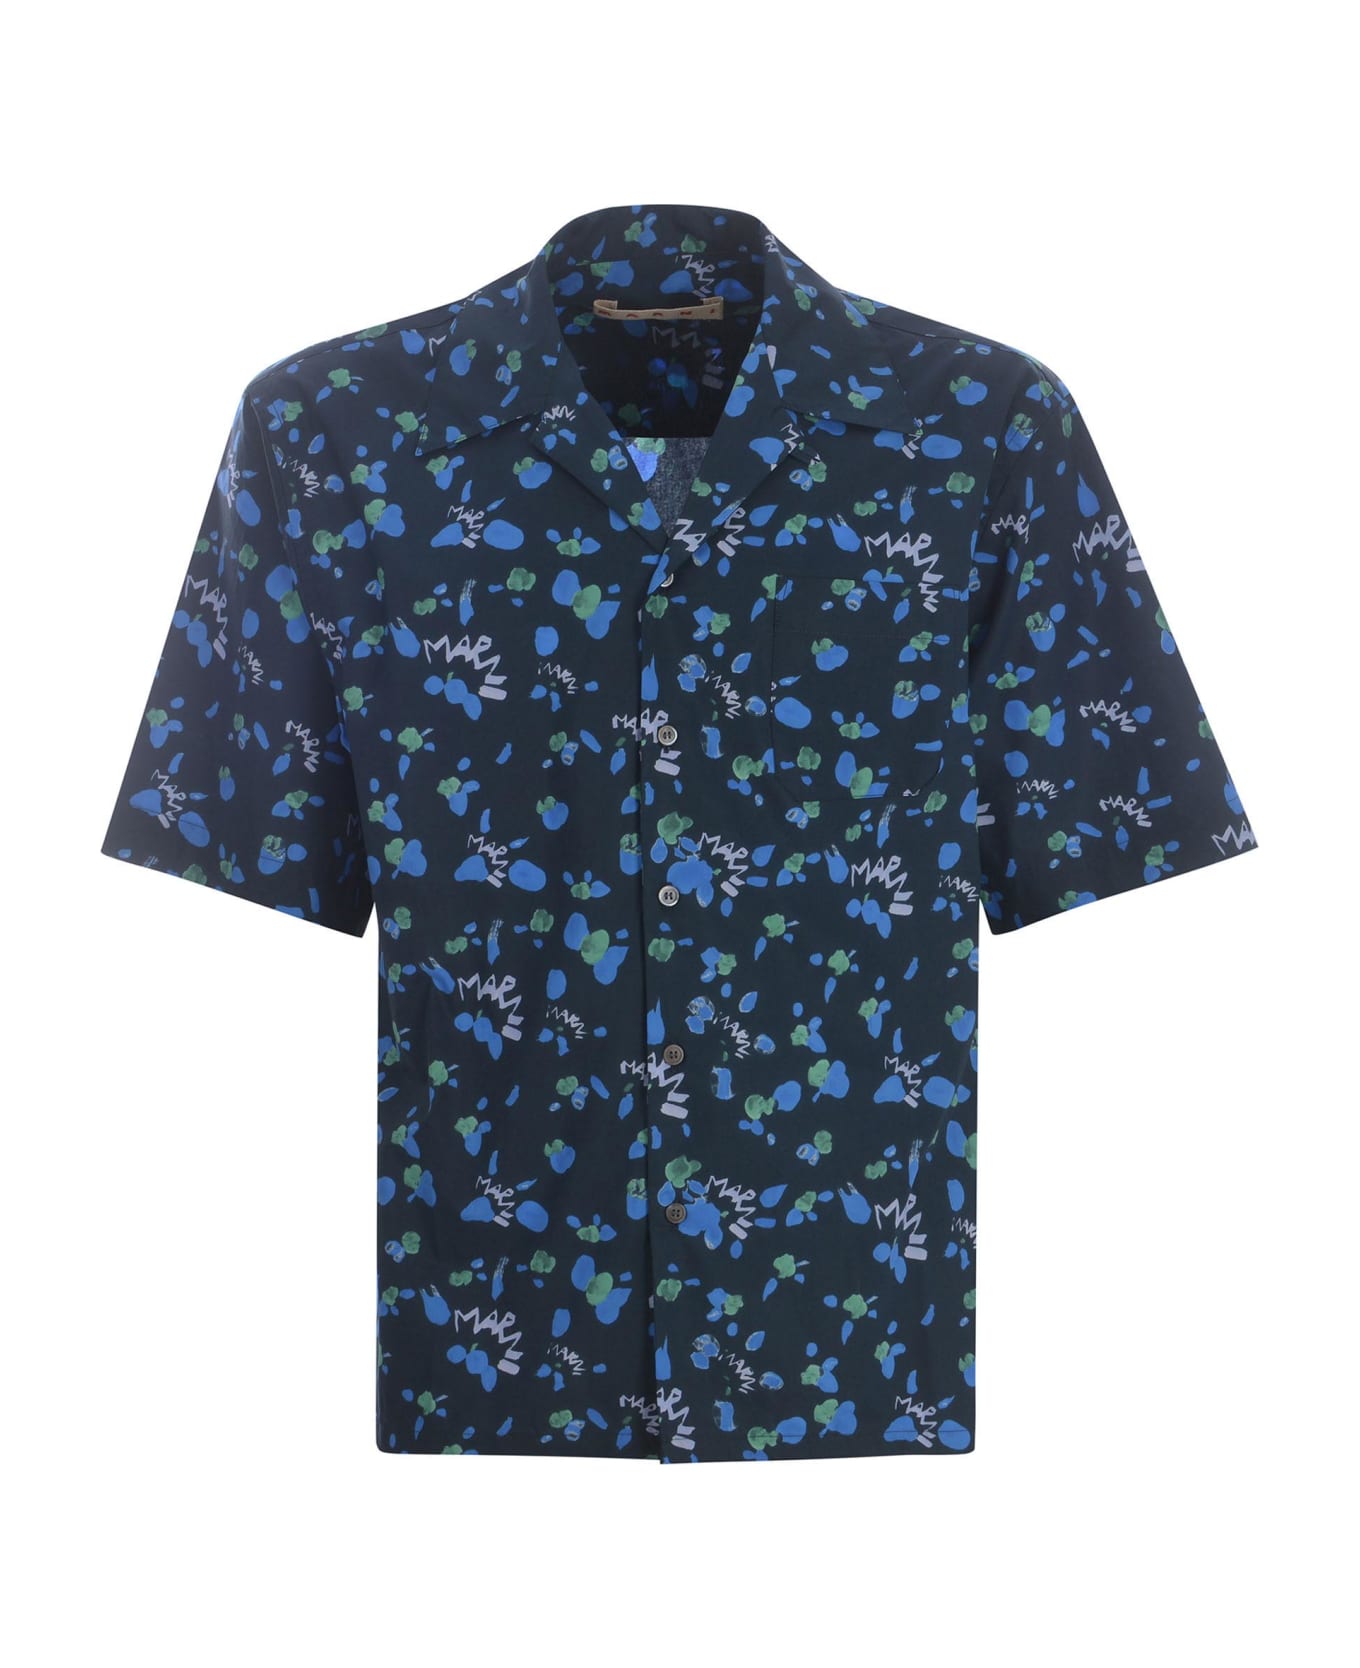 Marni Shirt Marni Made Of Cotton - Blu